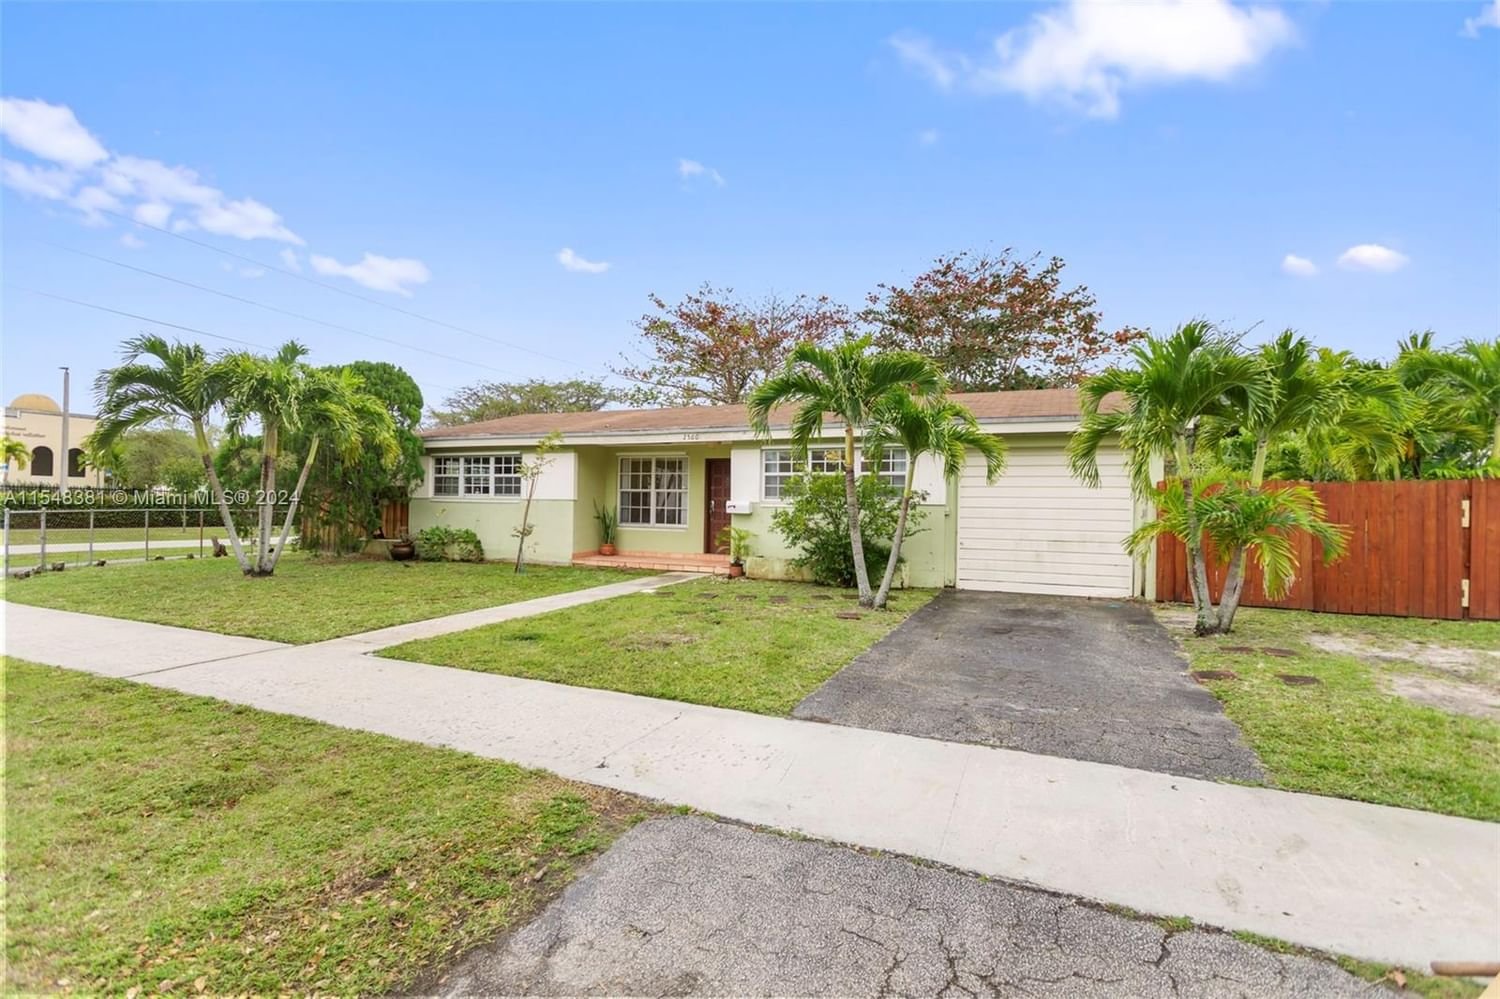 Real estate property located at 2560 207th Ter, Miami-Dade County, SUNSWEPT ISLE 1ST ADDN, Miami, FL